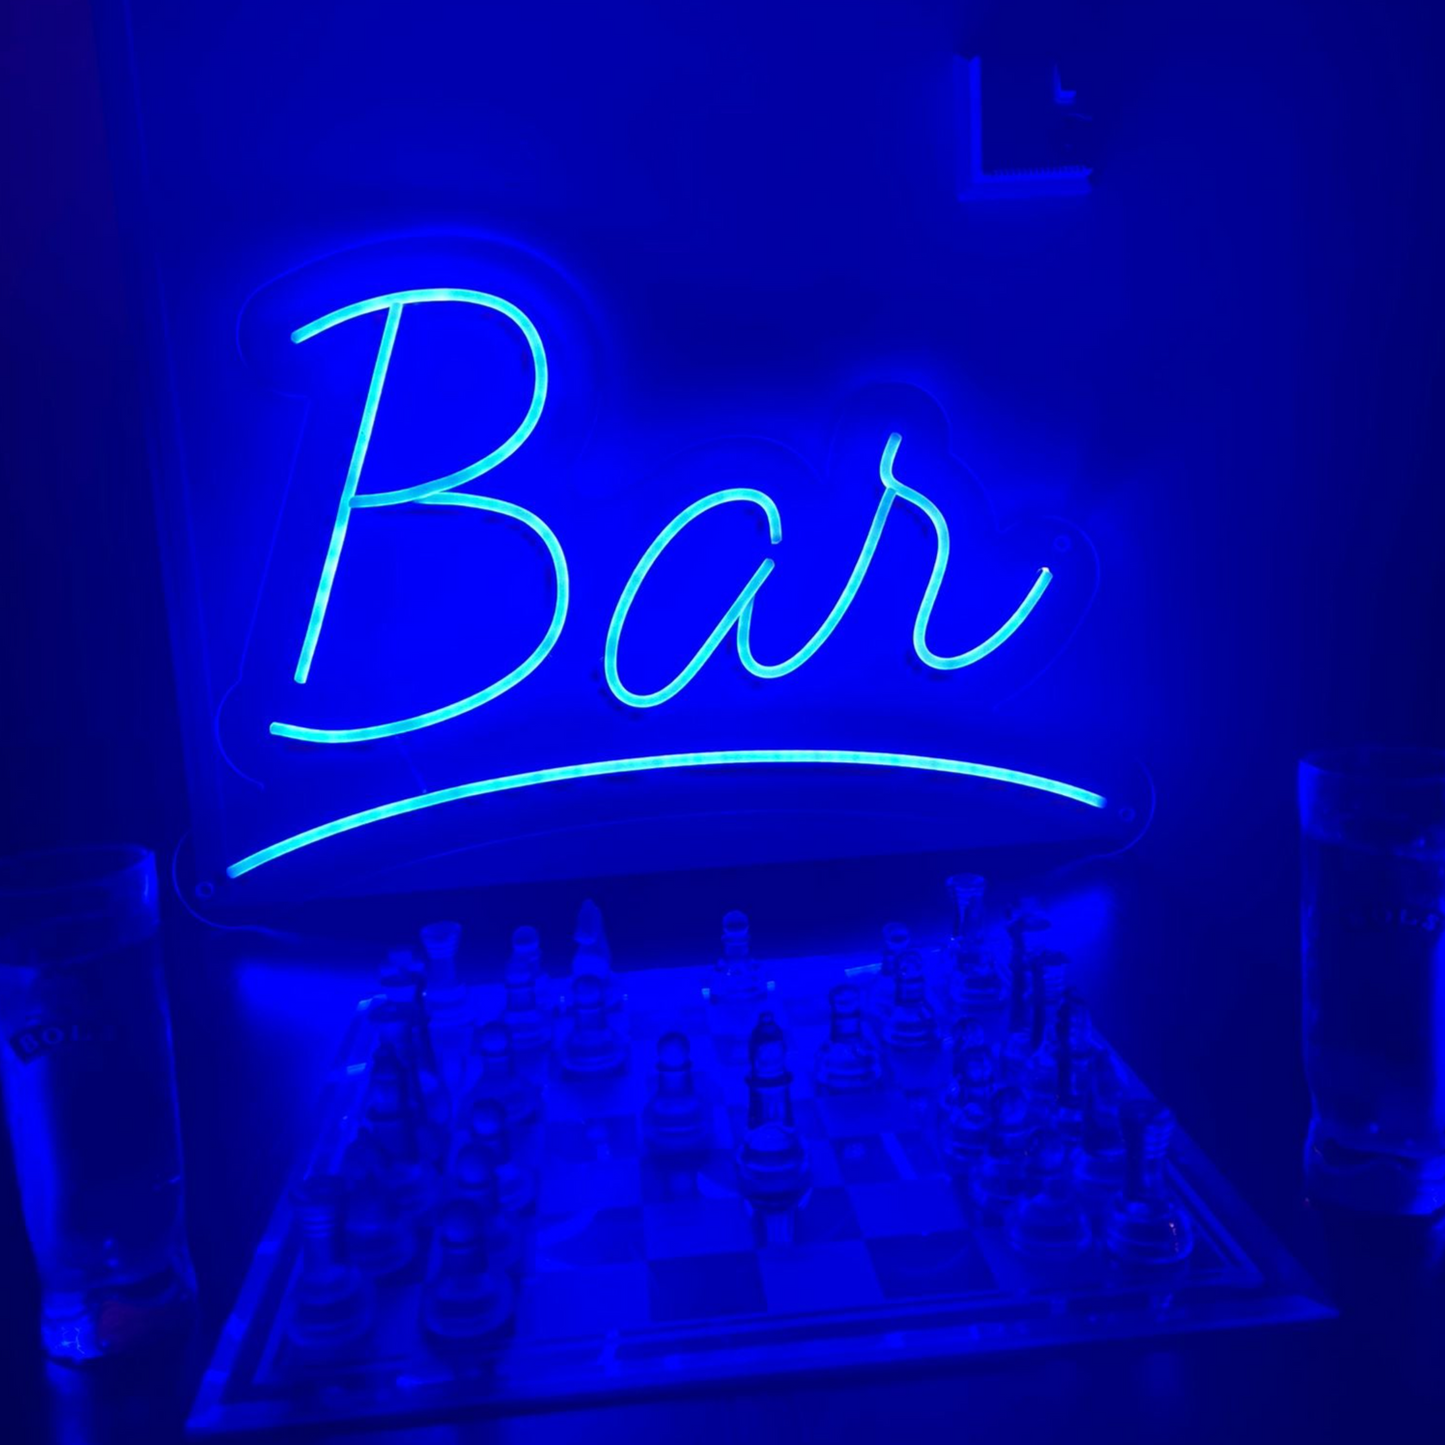 Bar neonreclame